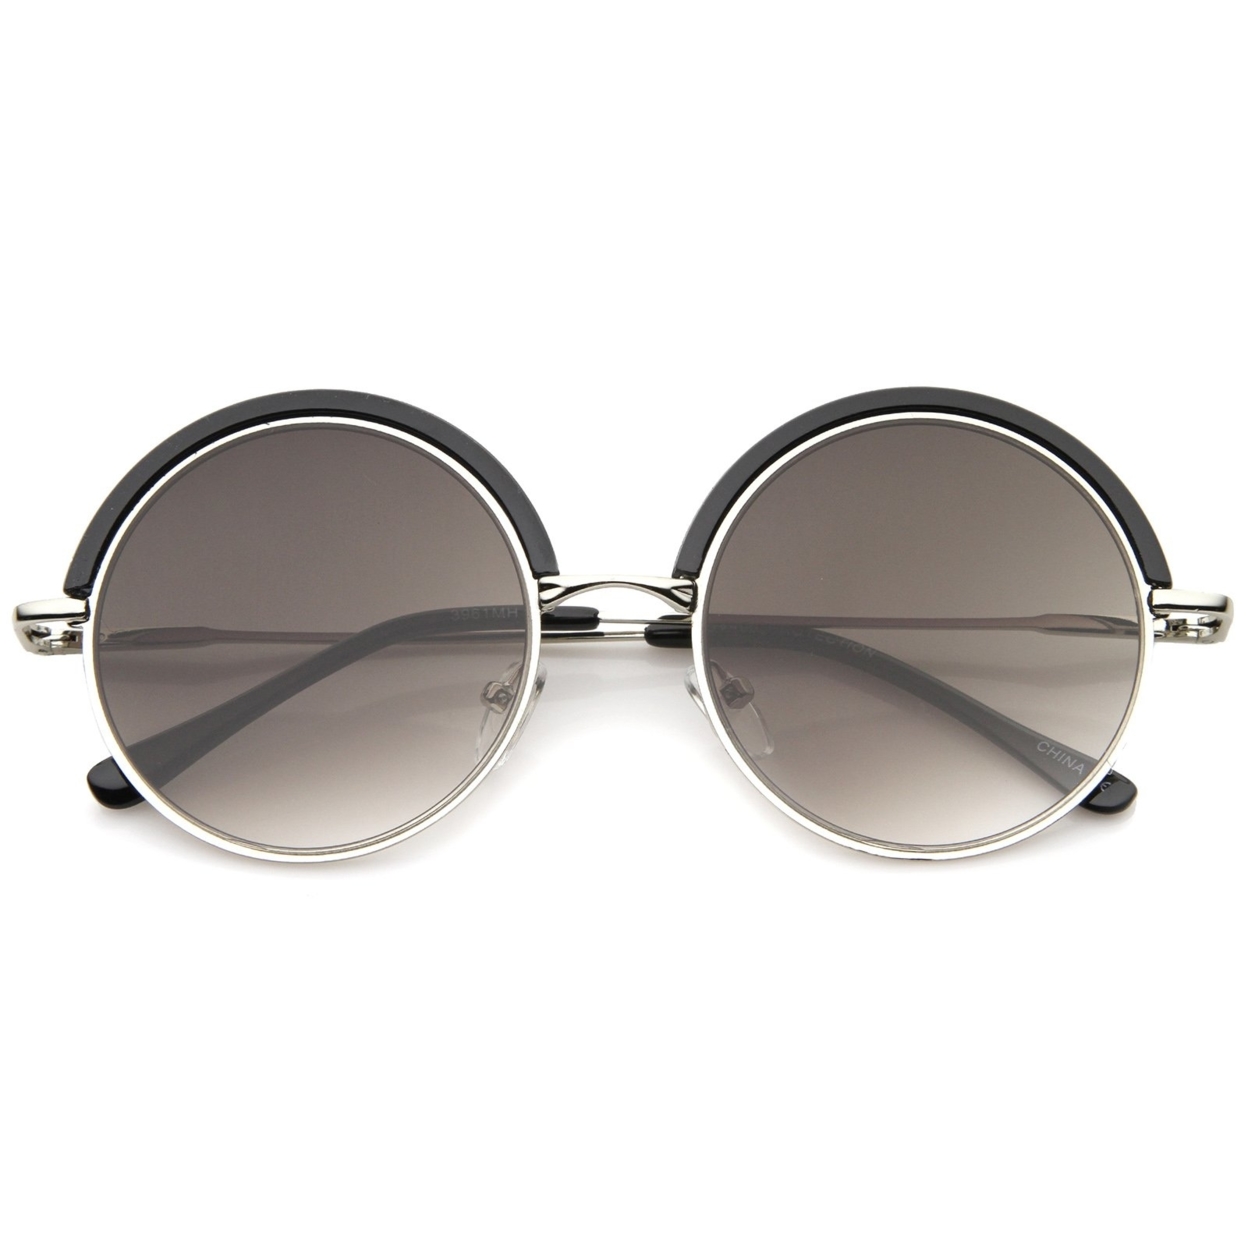 Retro Metal Frame Thin Temple Top Trim Flat Lens Round Sunglasses 51mm - Black-Silver / Lavender